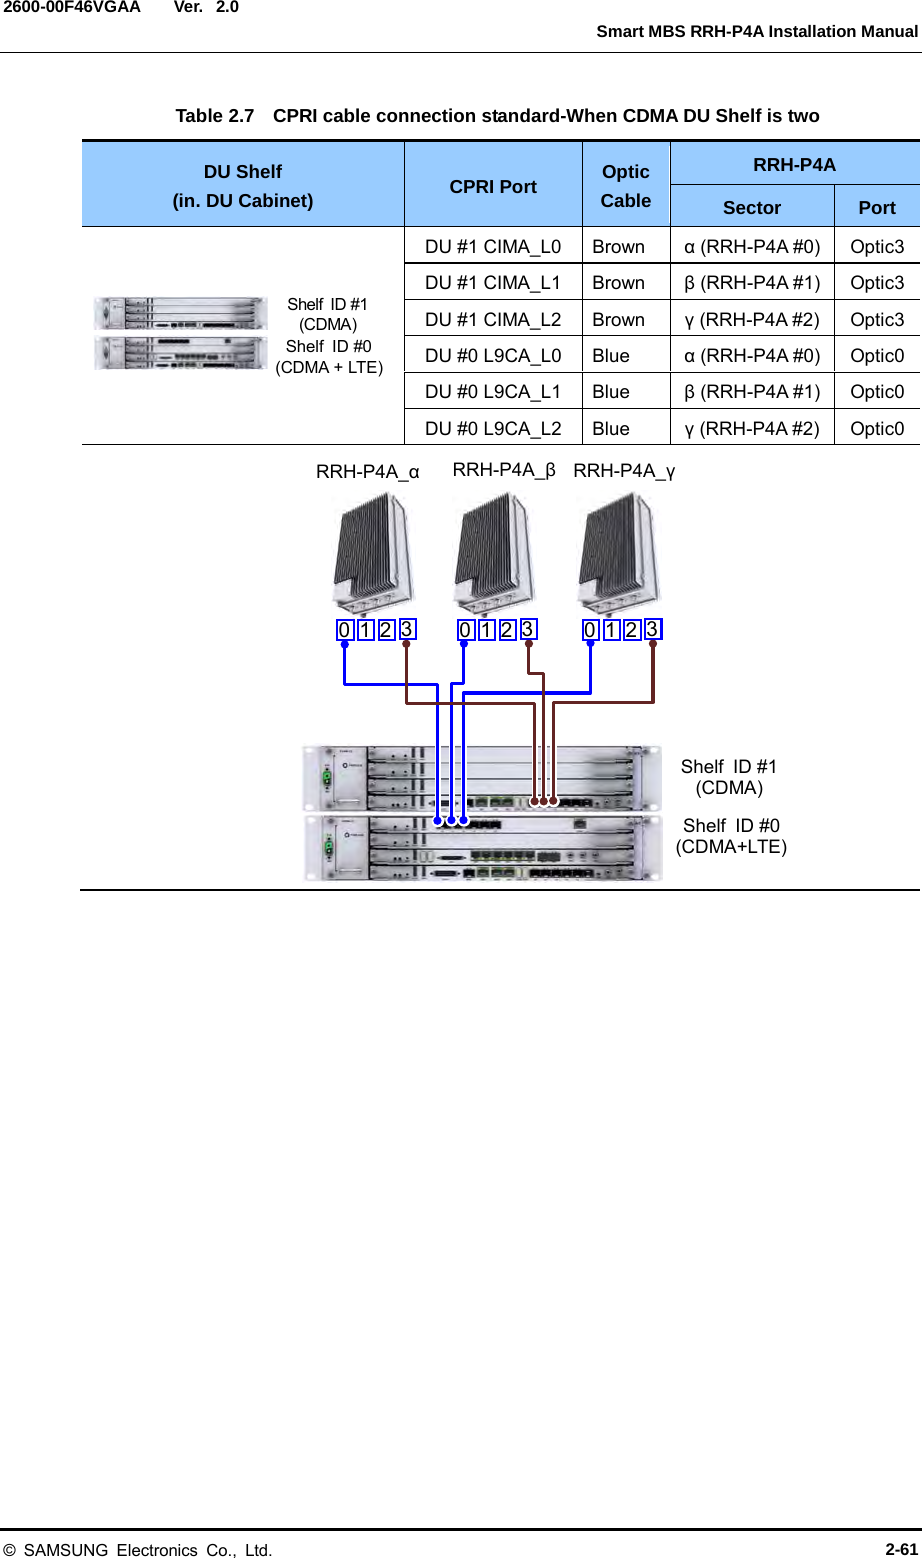  Ver.   Smart MBS RRH-P4A Installation Manual 2600-00F46VGAA 2.0 Table 2.7    CPRI cable connection standard-When CDMA DU Shelf is two DU Shelf   (in. DU Cabinet) CPRI Port Optic Cable RRH-P4A Sector  Port  DU #1 CIMA_L0 Brown α (RRH-P4A #0) Optic3 DU #1 CIMA_L1 Brown β (RRH-P4A #1) Optic3 DU #1 CIMA_L2 Brown γ (RRH-P4A #2) Optic3 DU #0 L9CA_L0 Blue α (RRH-P4A #0) Optic0 DU #0 L9CA_L1 Blue β (RRH-P4A #1) Optic0 DU #0 L9CA_L2 Blue γ (RRH-P4A #2) Optic0                 Shelf ID #0 (CDMA + LTE) Shelf ID #1 (CDMA) Shelf ID #0 (CDMA+LTE) Shelf ID #1 (CDMA) 0 1 2 3 RRH-P4A_α 0 1 2 3 RRH-P4A_β 0 1 2 3 RRH-P4A_γ © SAMSUNG Electronics Co., Ltd. 2-61 